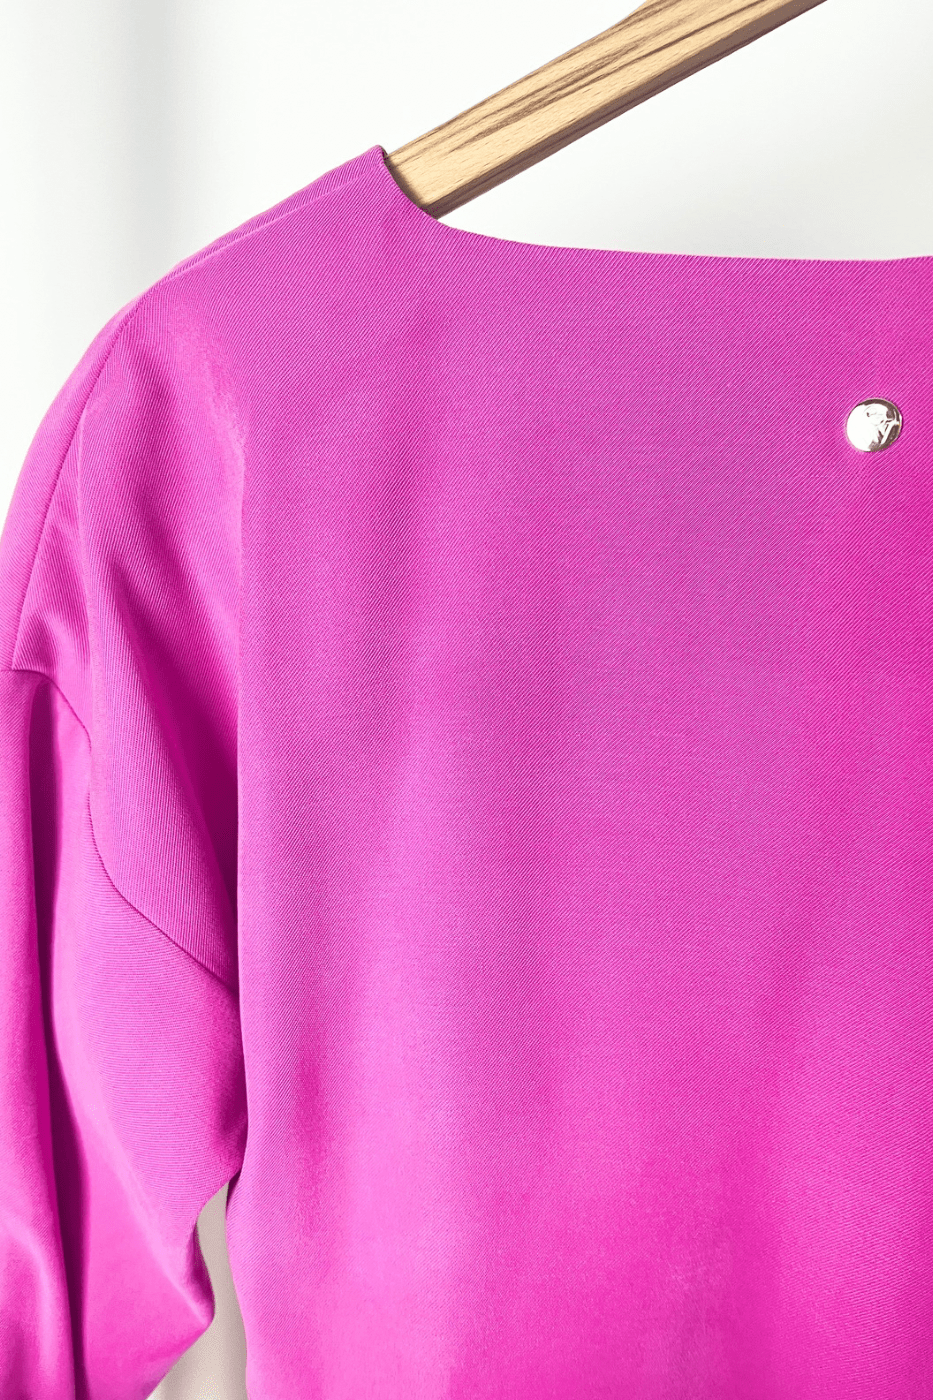 Deauville felső - egyedi gyartás- pink - EW - Essential Wardrobe